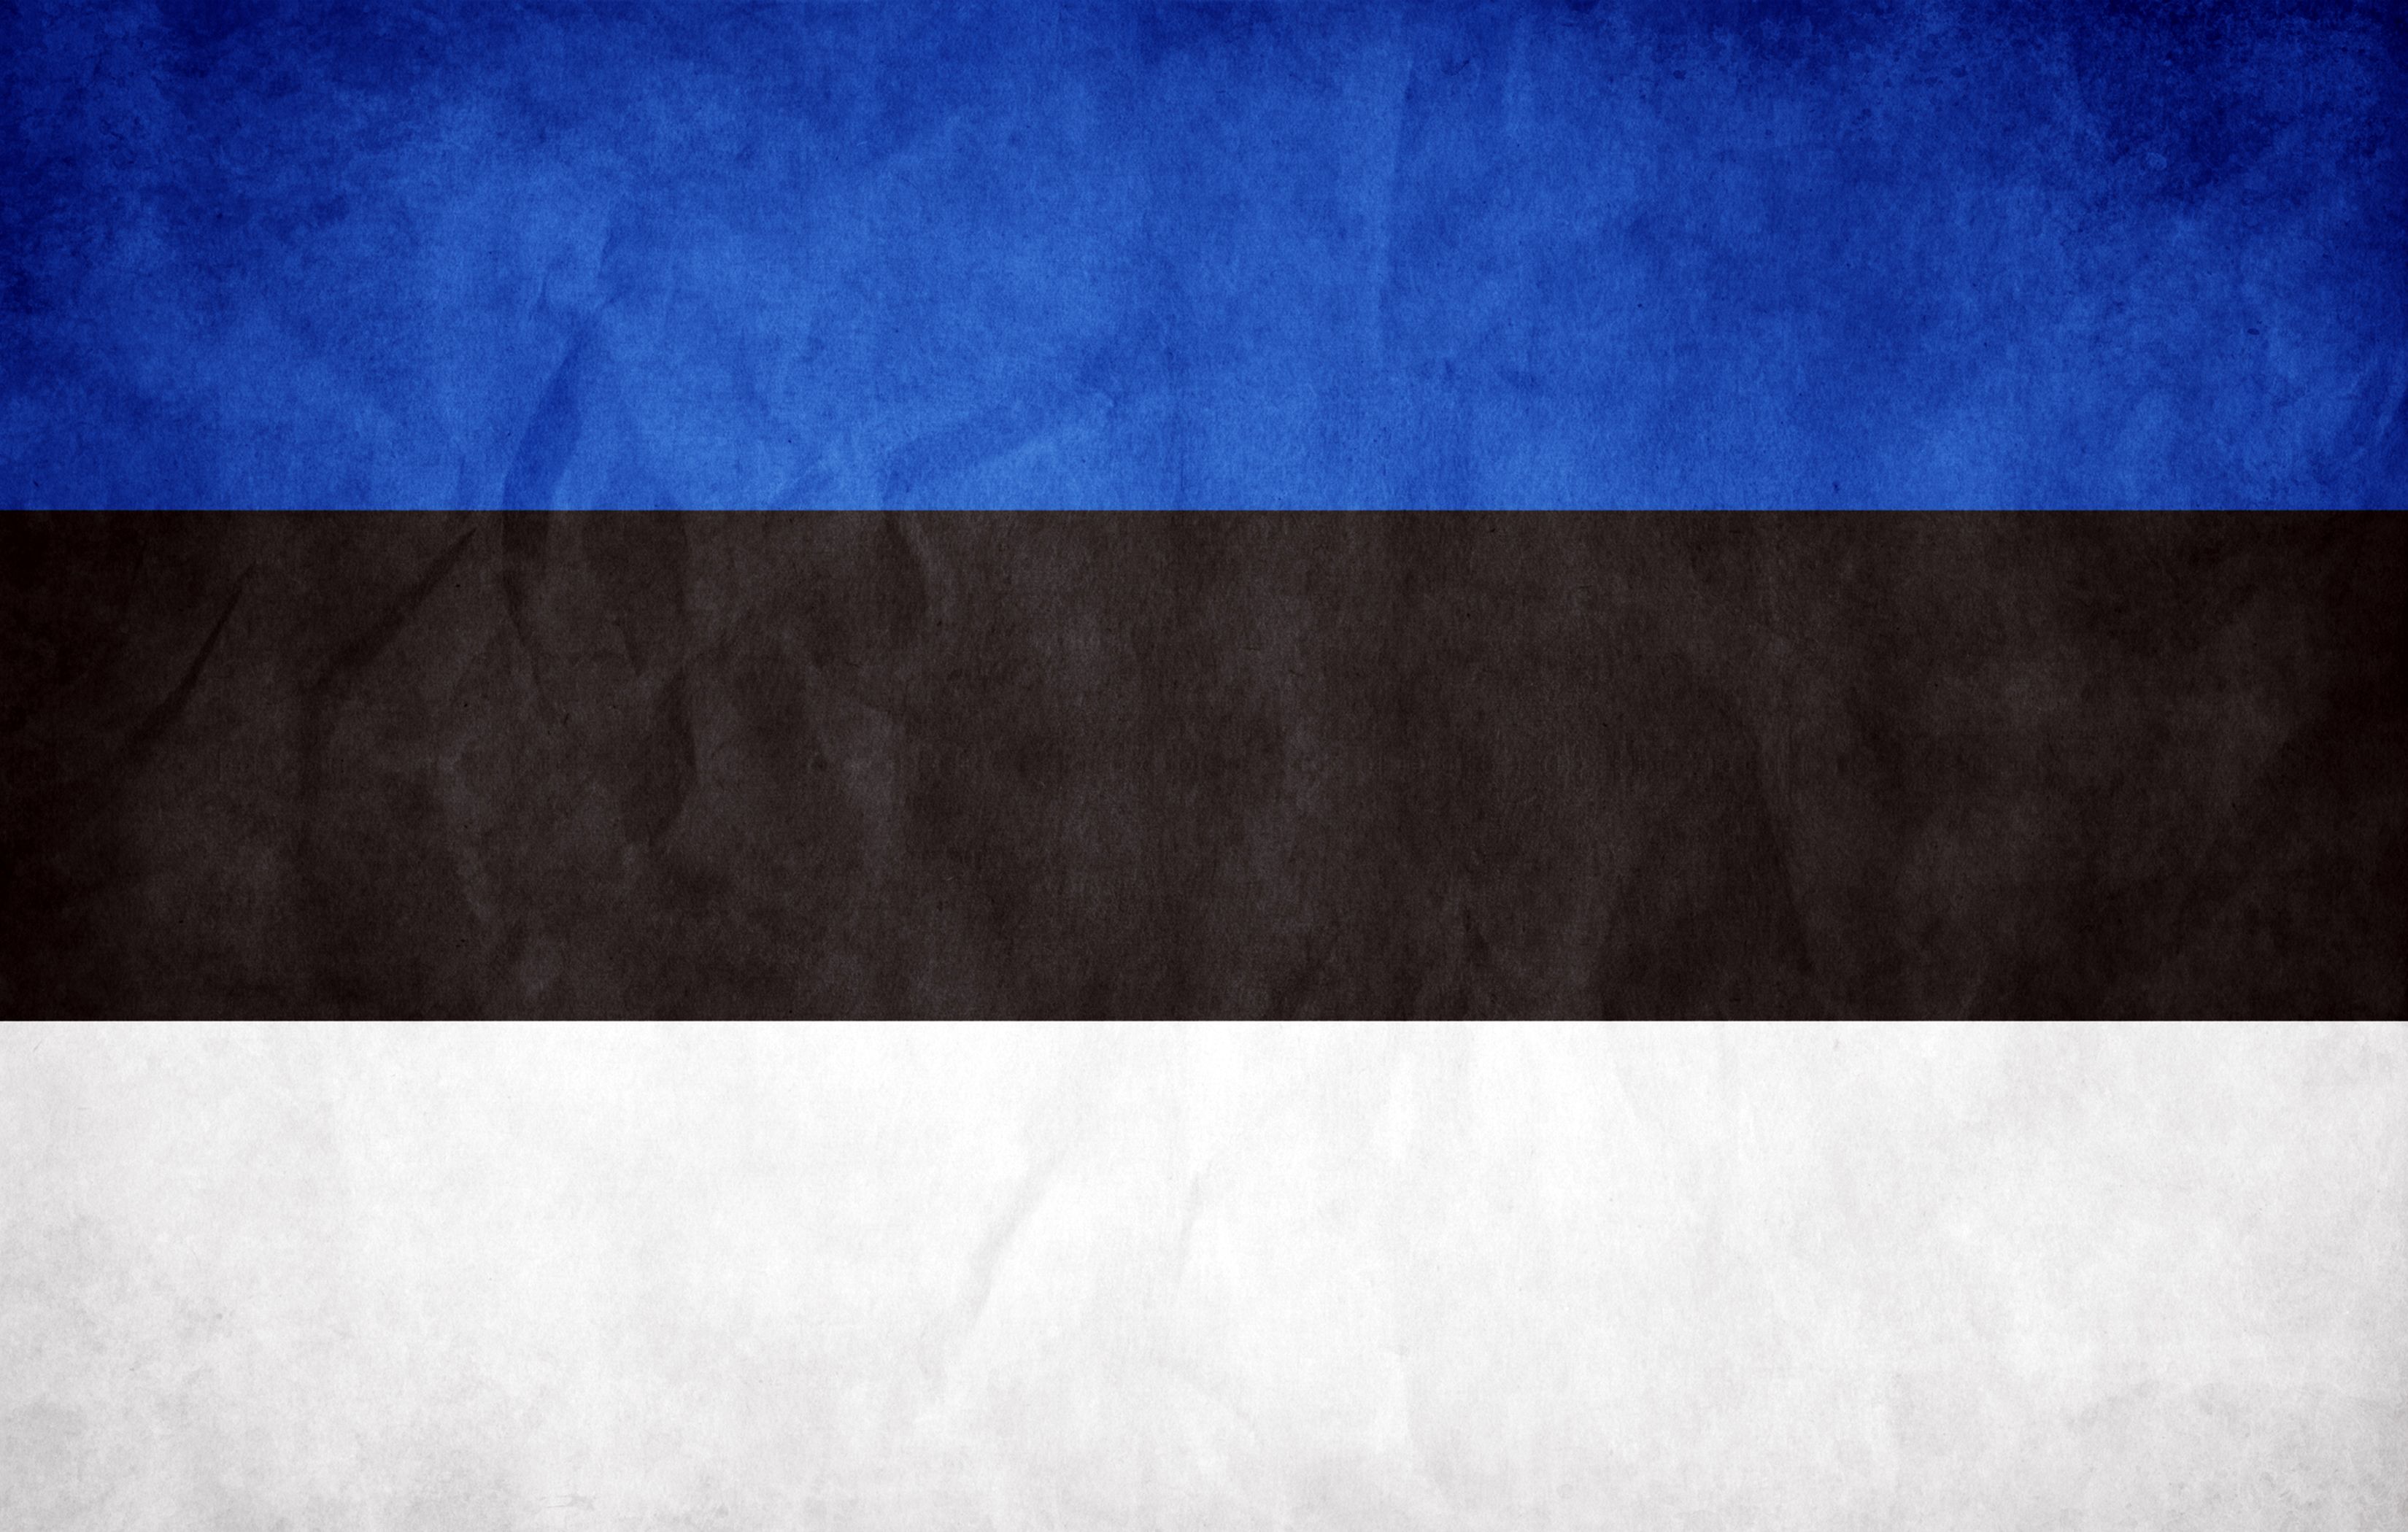 estonia flag - Google Search | * FLAG of the DAY | Pinterest ...